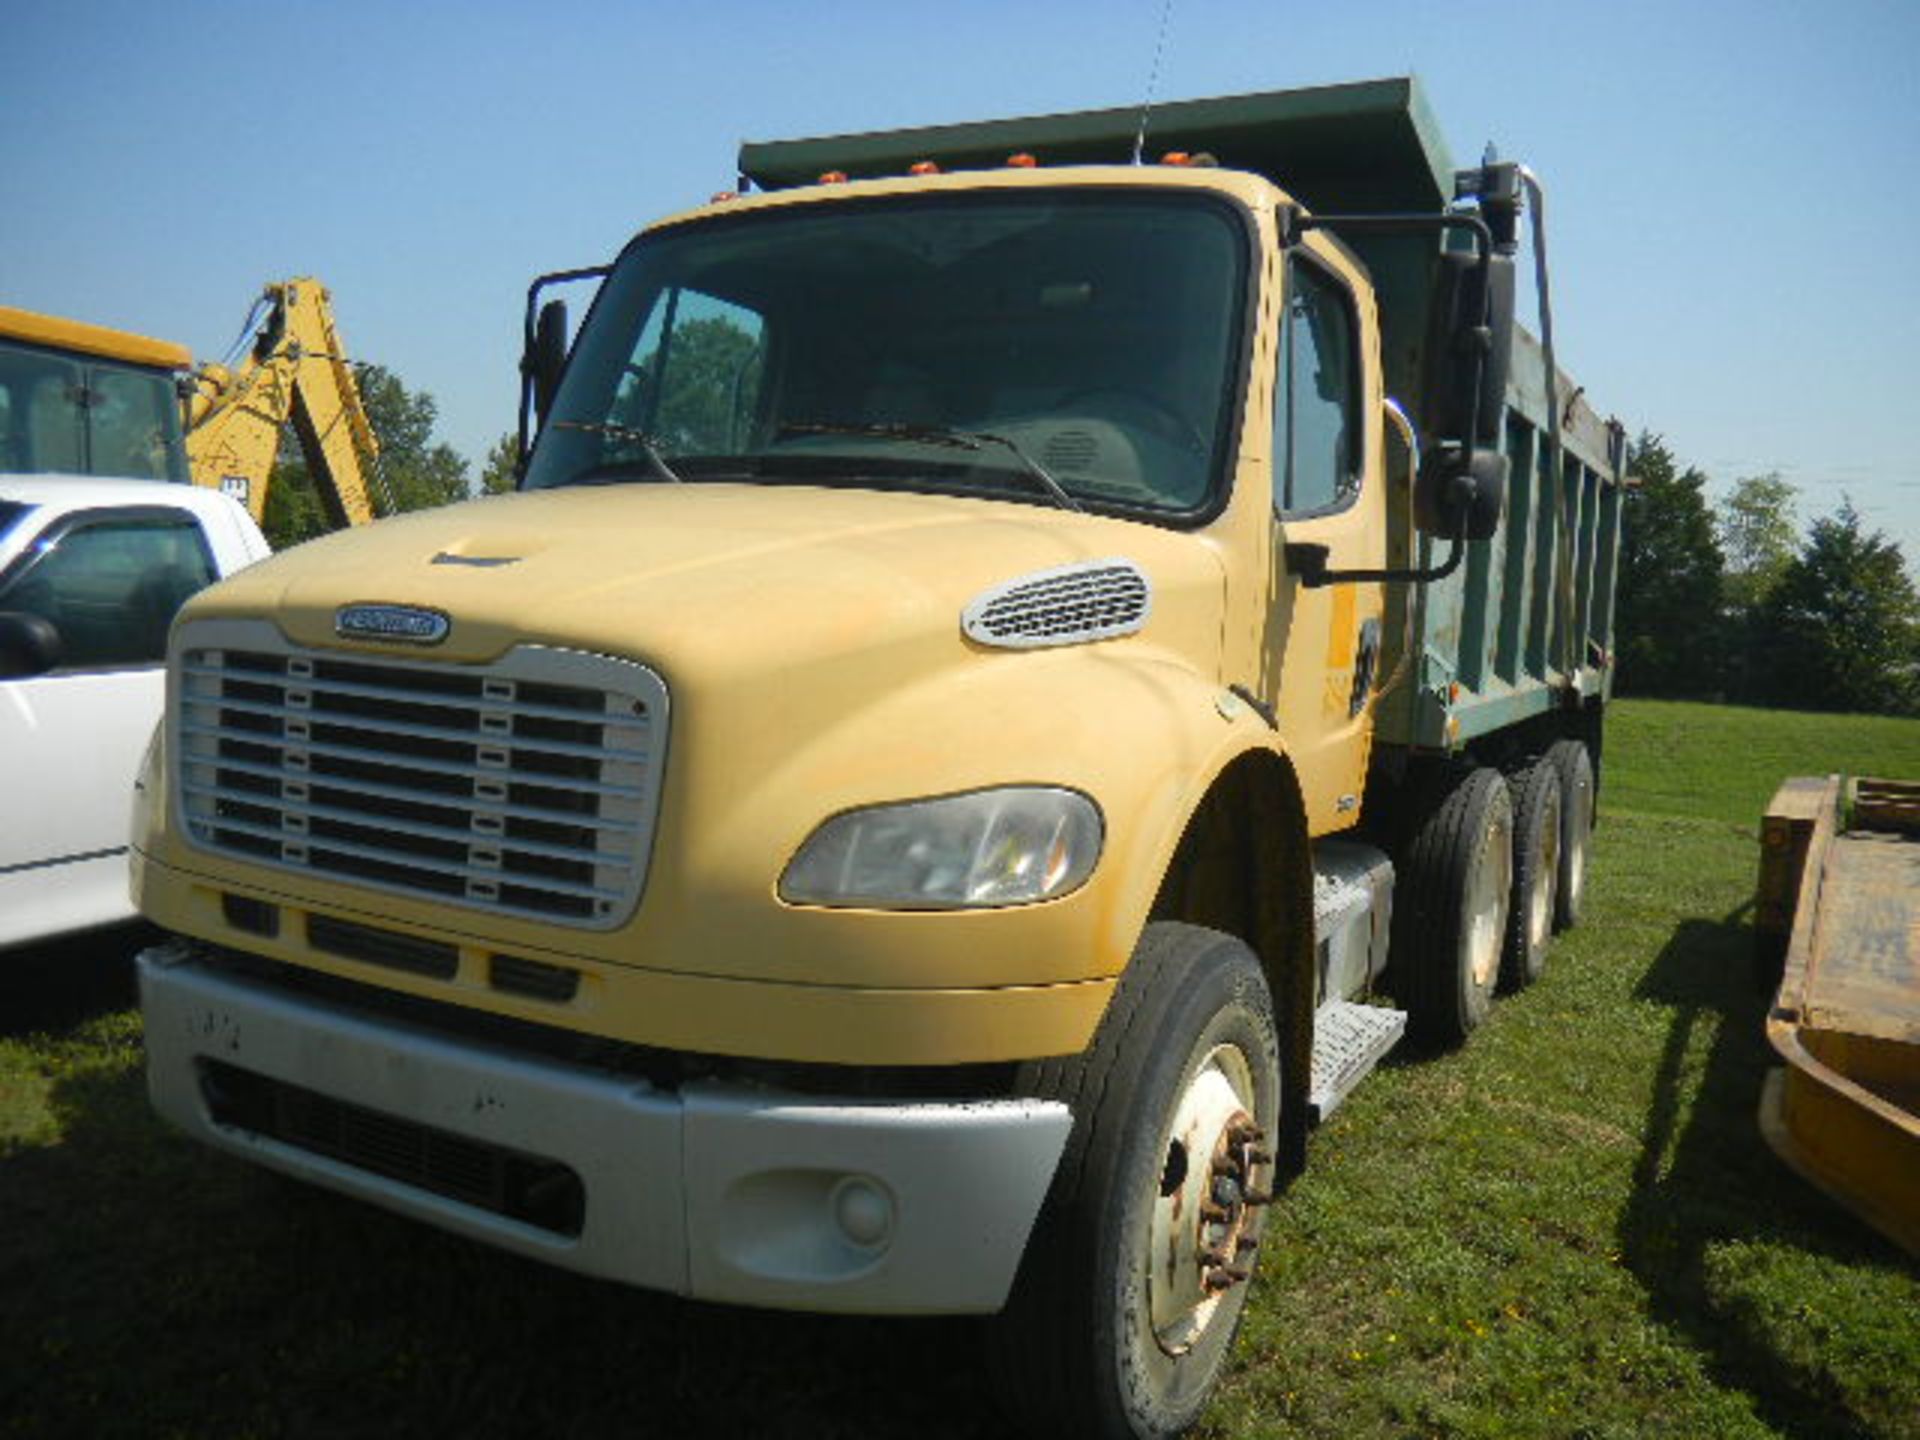 2008 Freightliner Tri-Axle Dump Truck - 104603 Miles - Asset I.D. (864) - Last of Vin (Z84668)